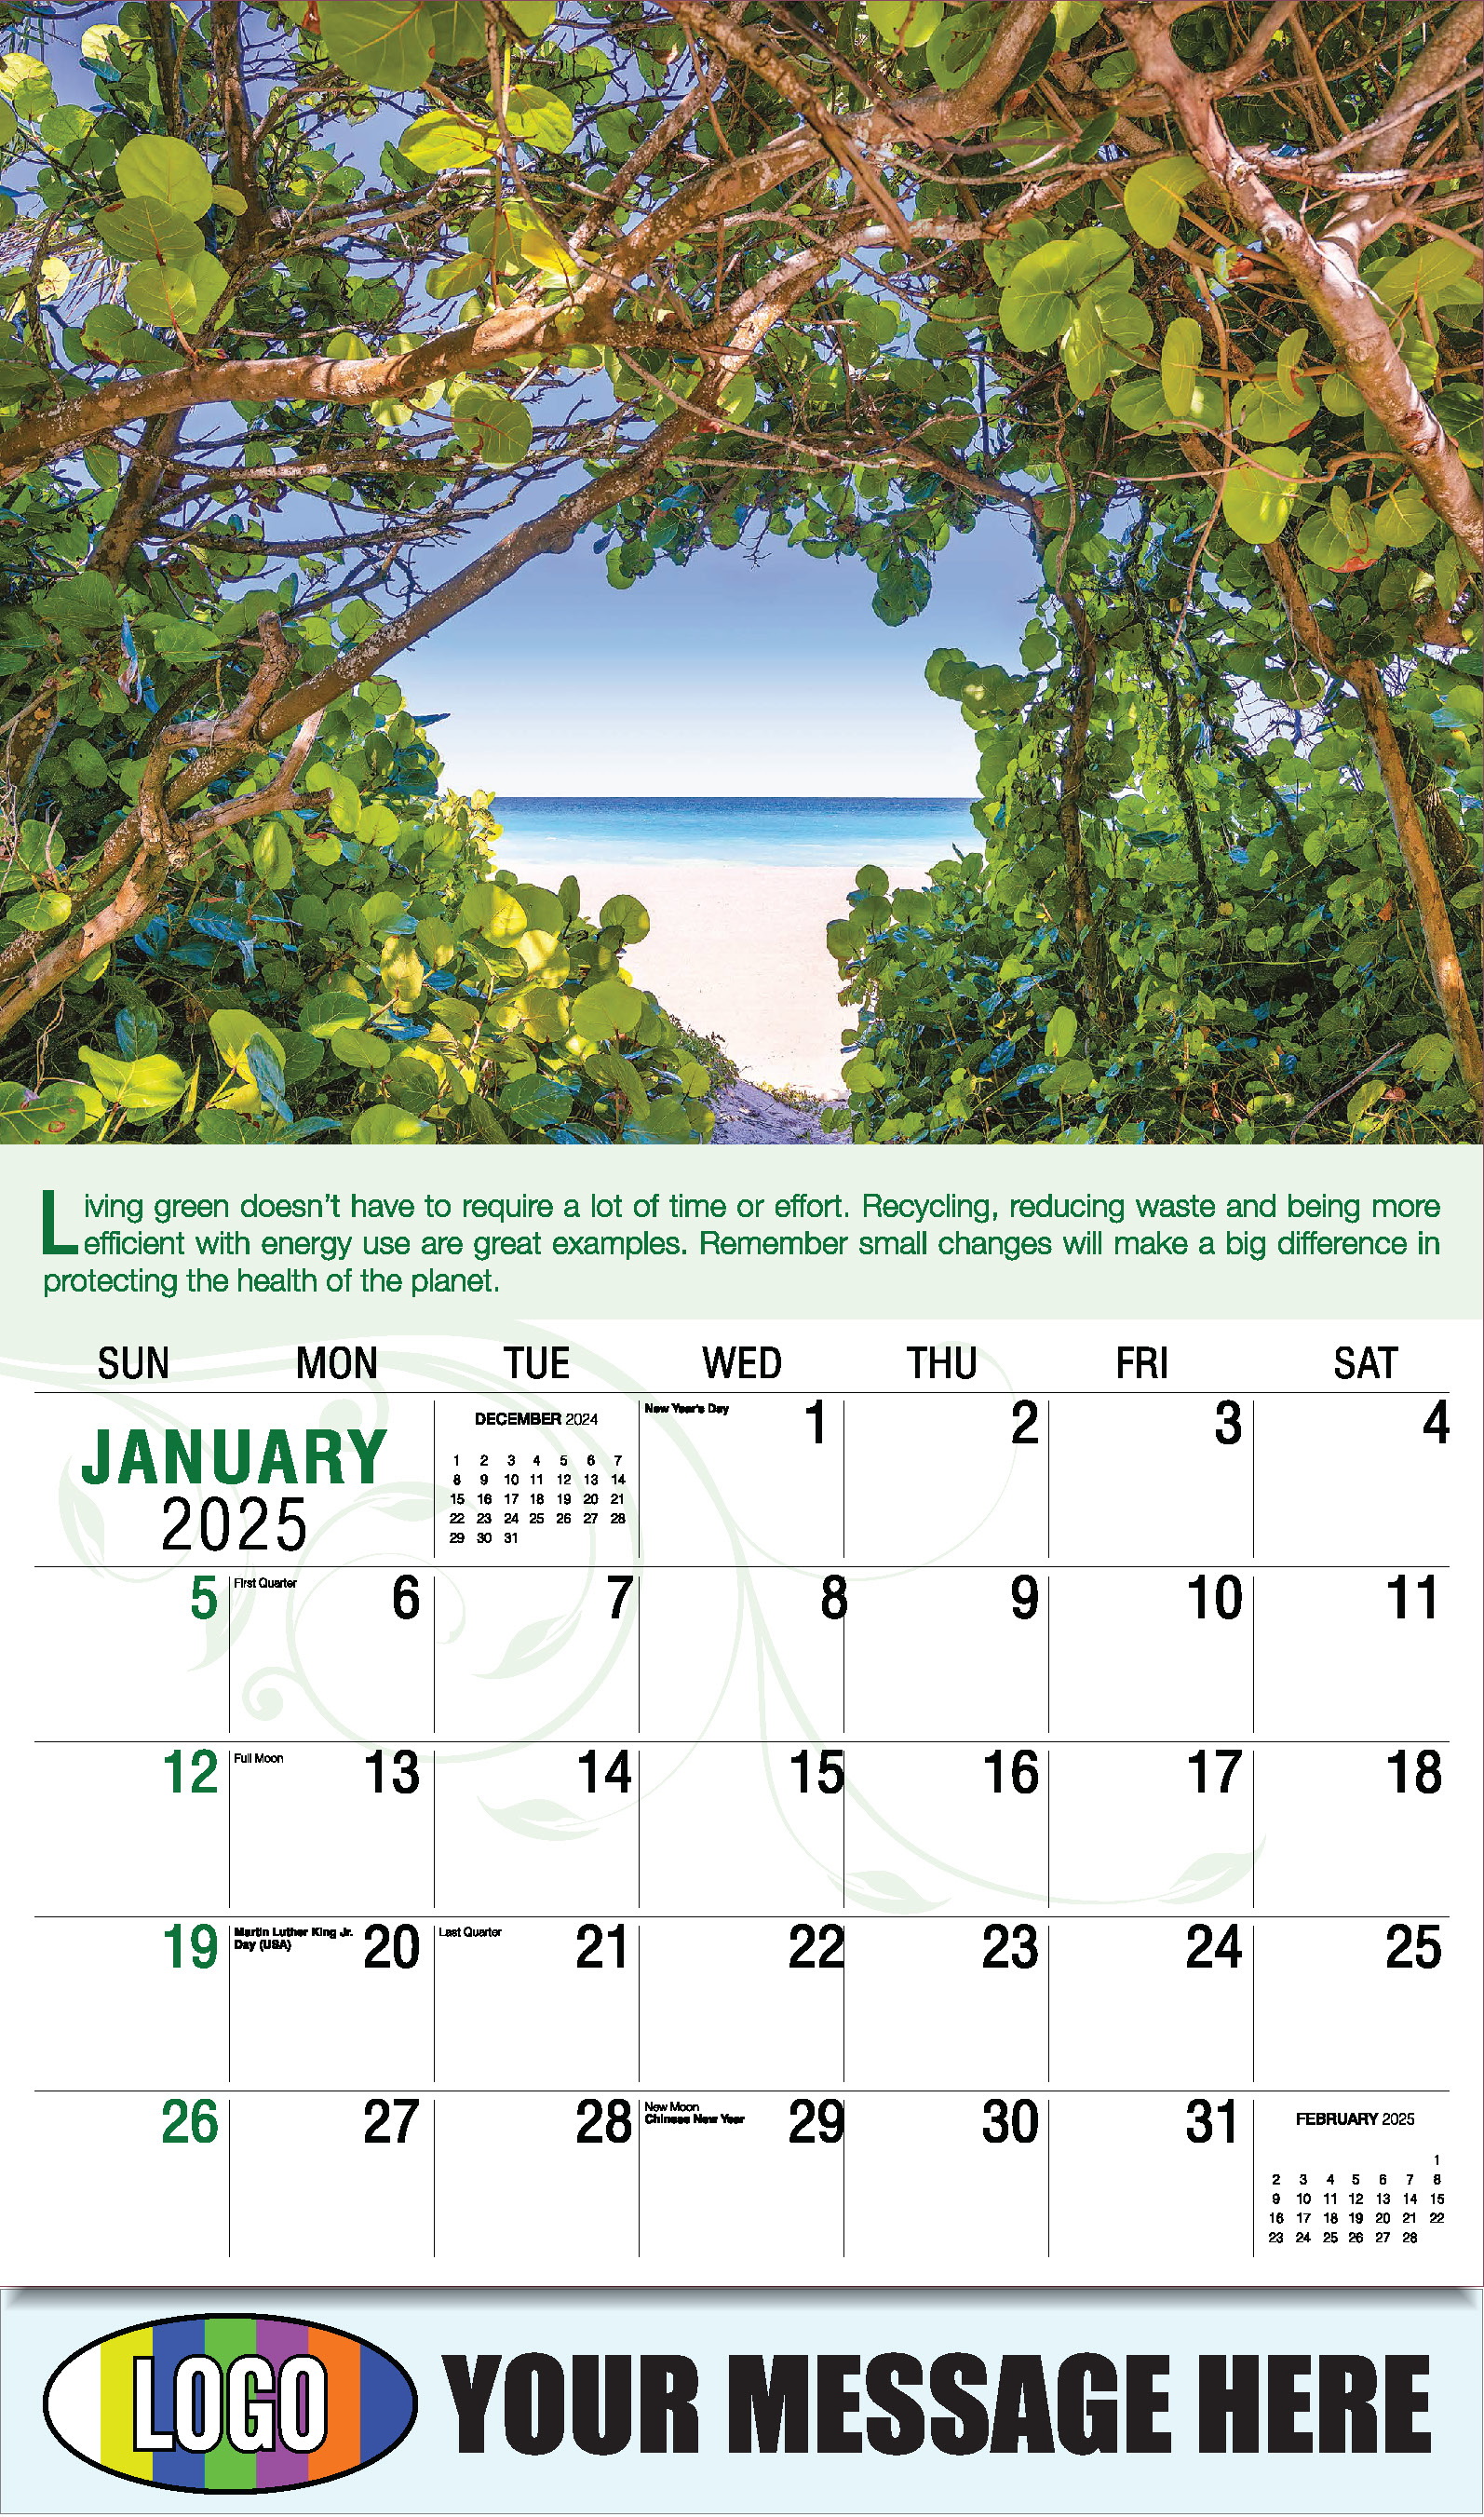 Go Green 2025 Business Promotion Calendar - January